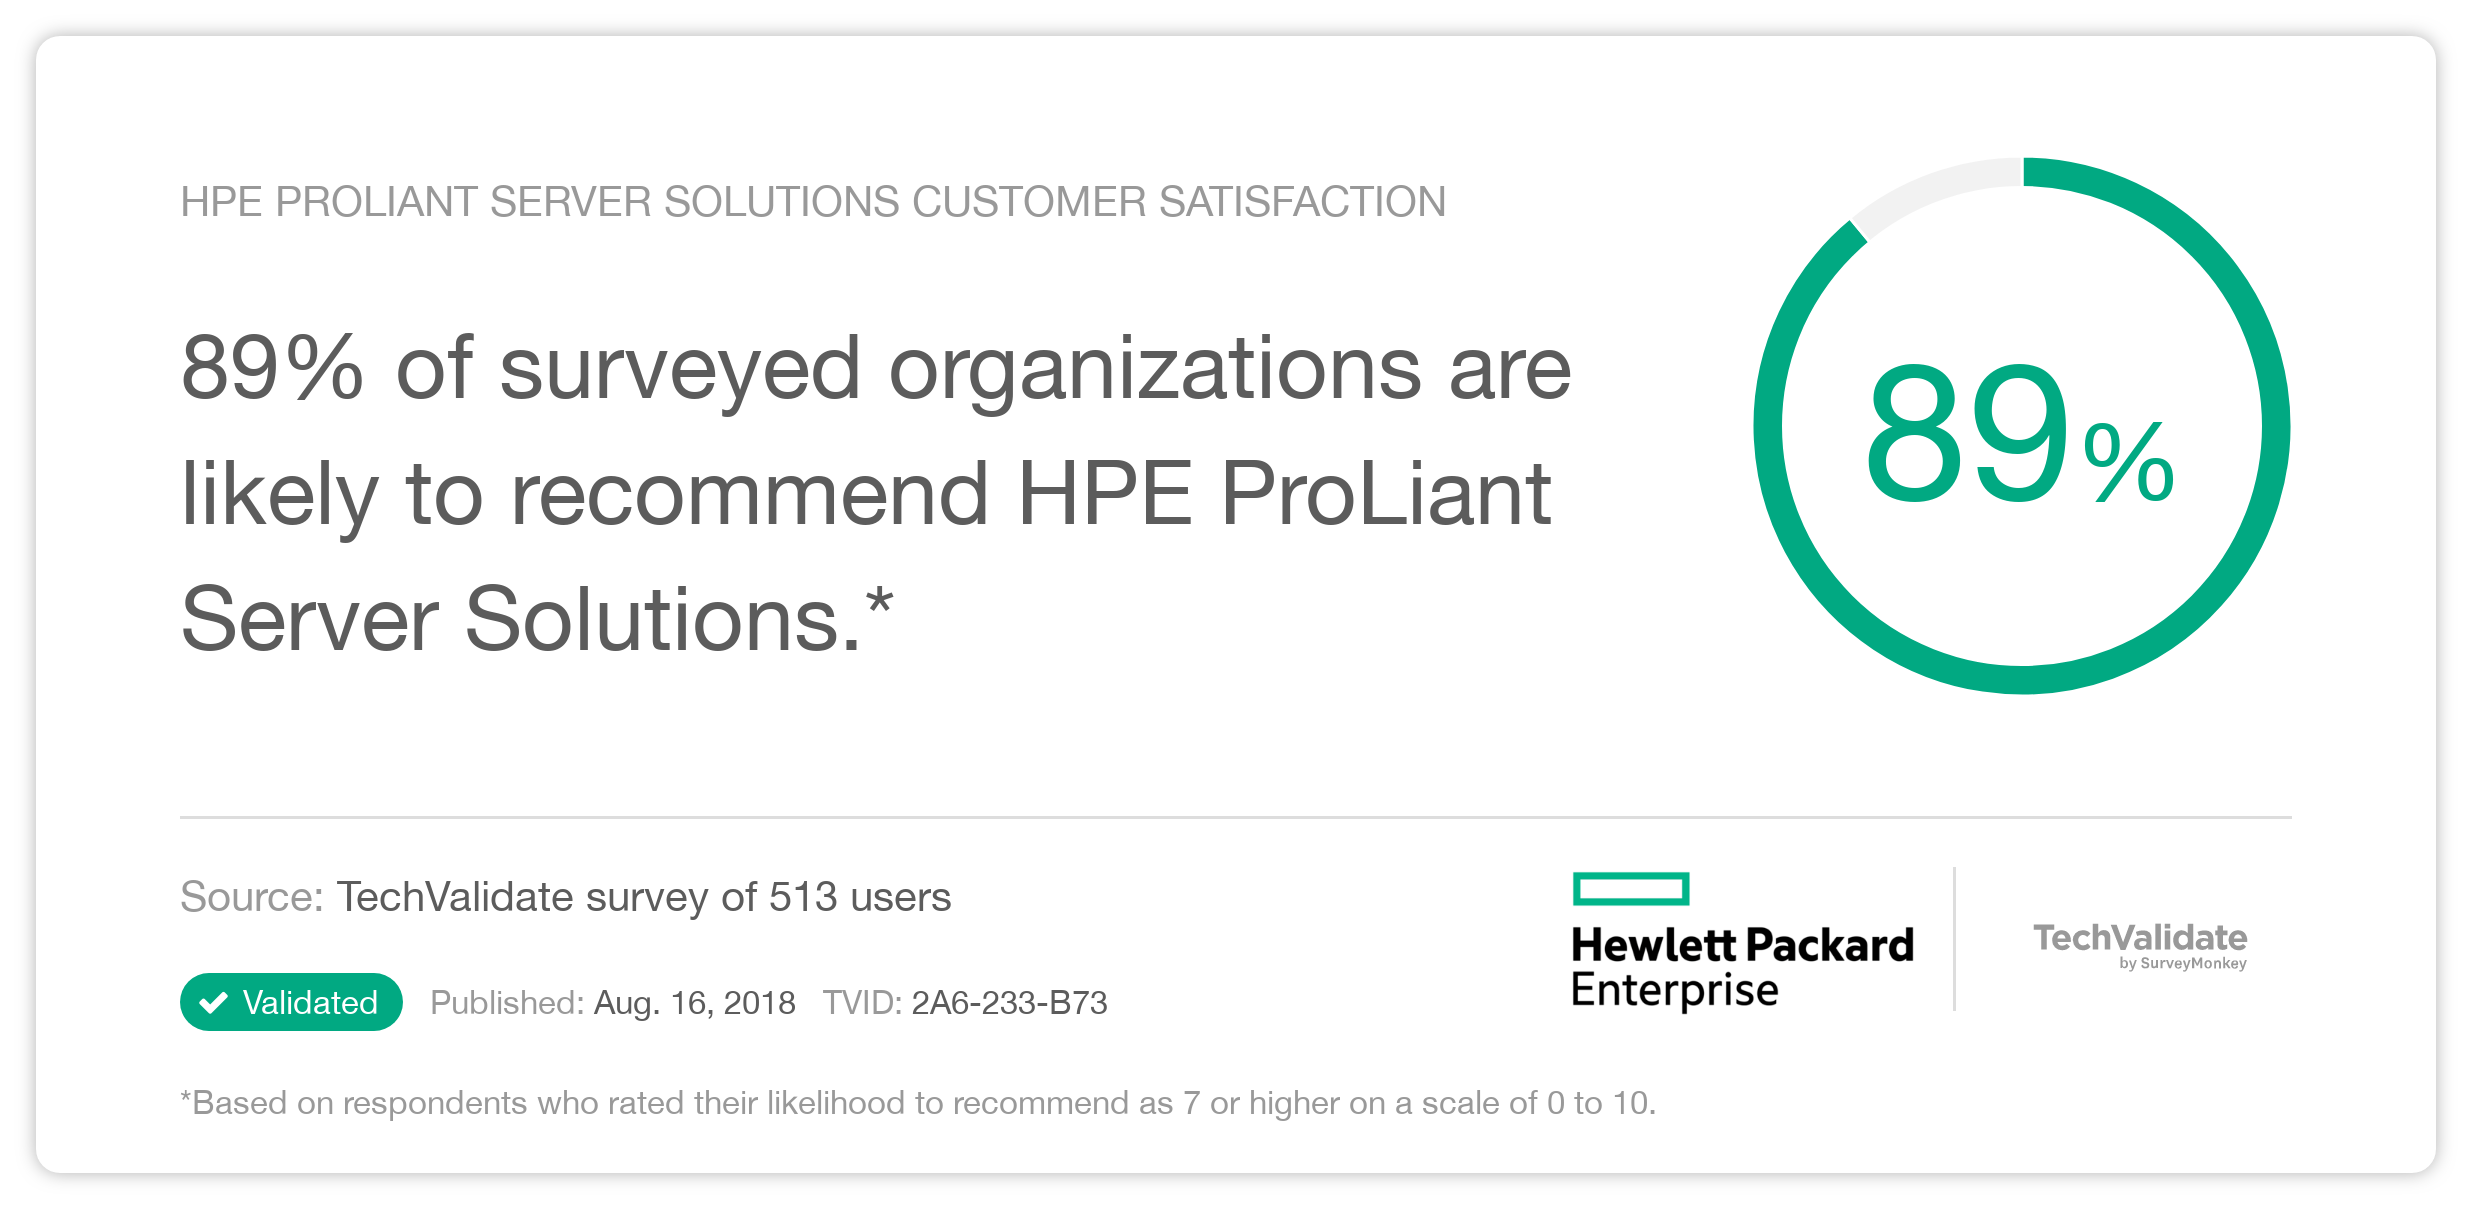 HPE ProLiant Server Solutions Customer Satisfaction